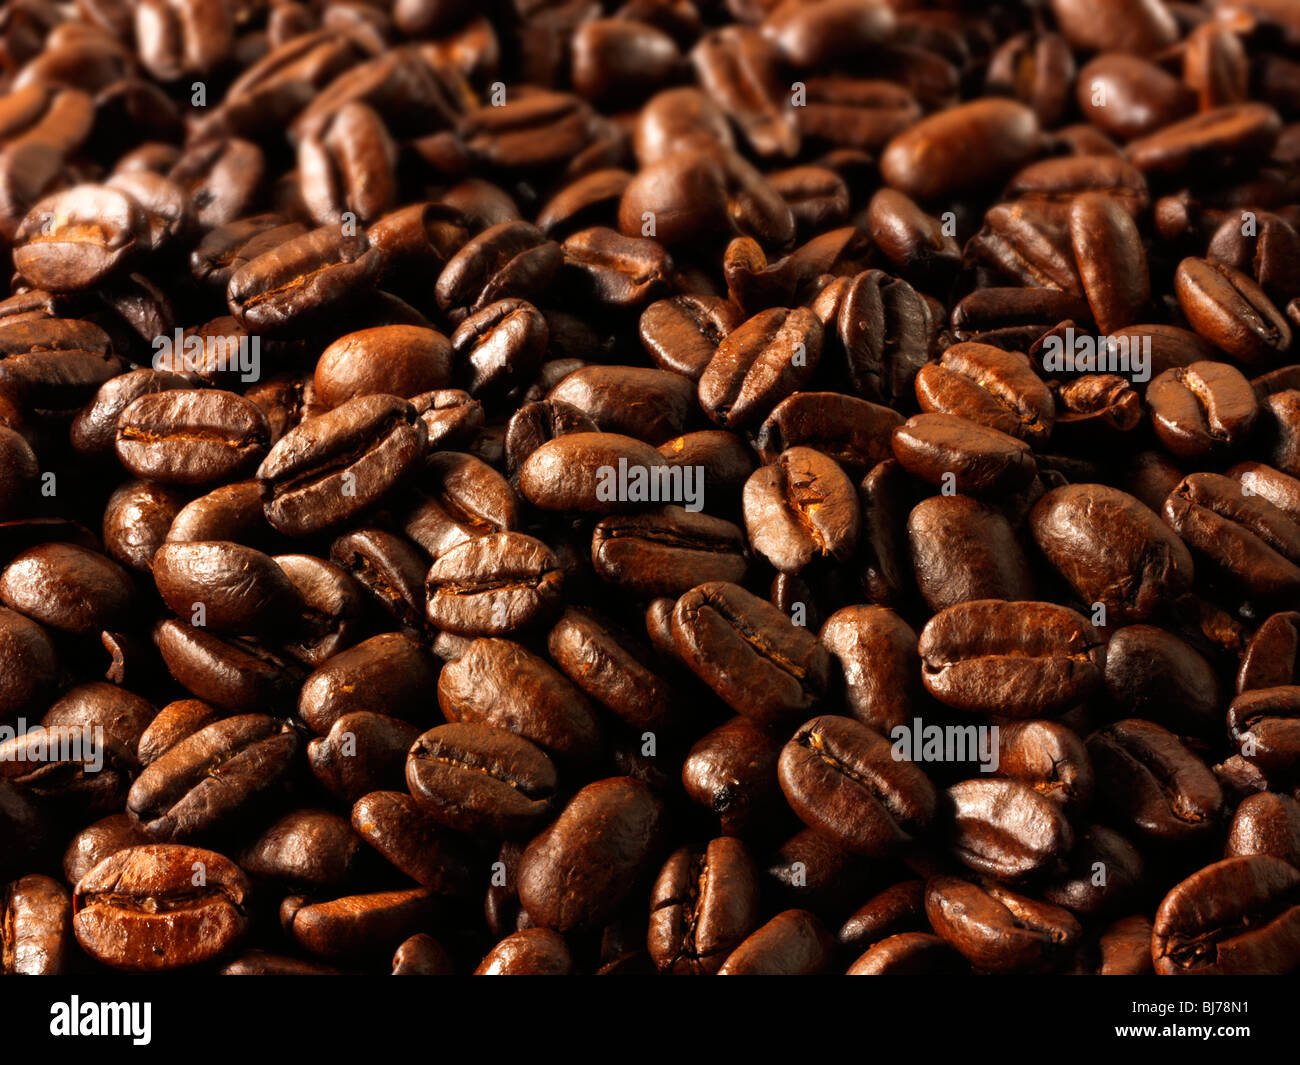 Papua New Guinea fair trade coffee beans stock Photos Stock Photo